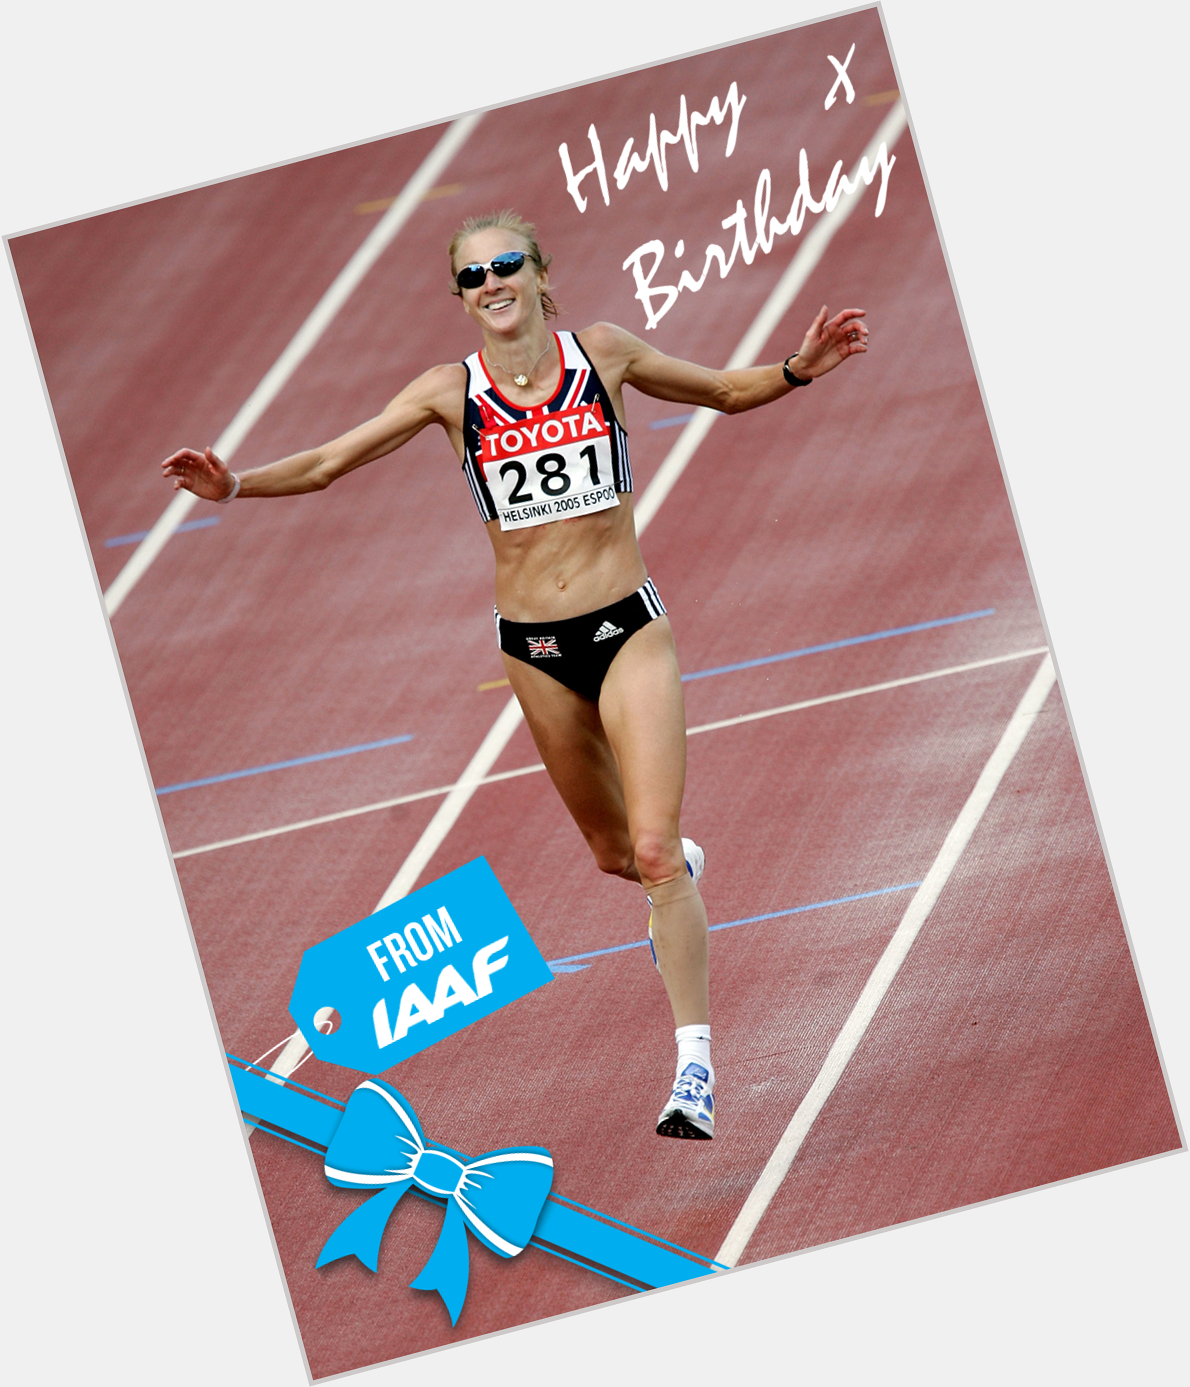  Happy birthday to world marathon record holder Paula Radcliffe 